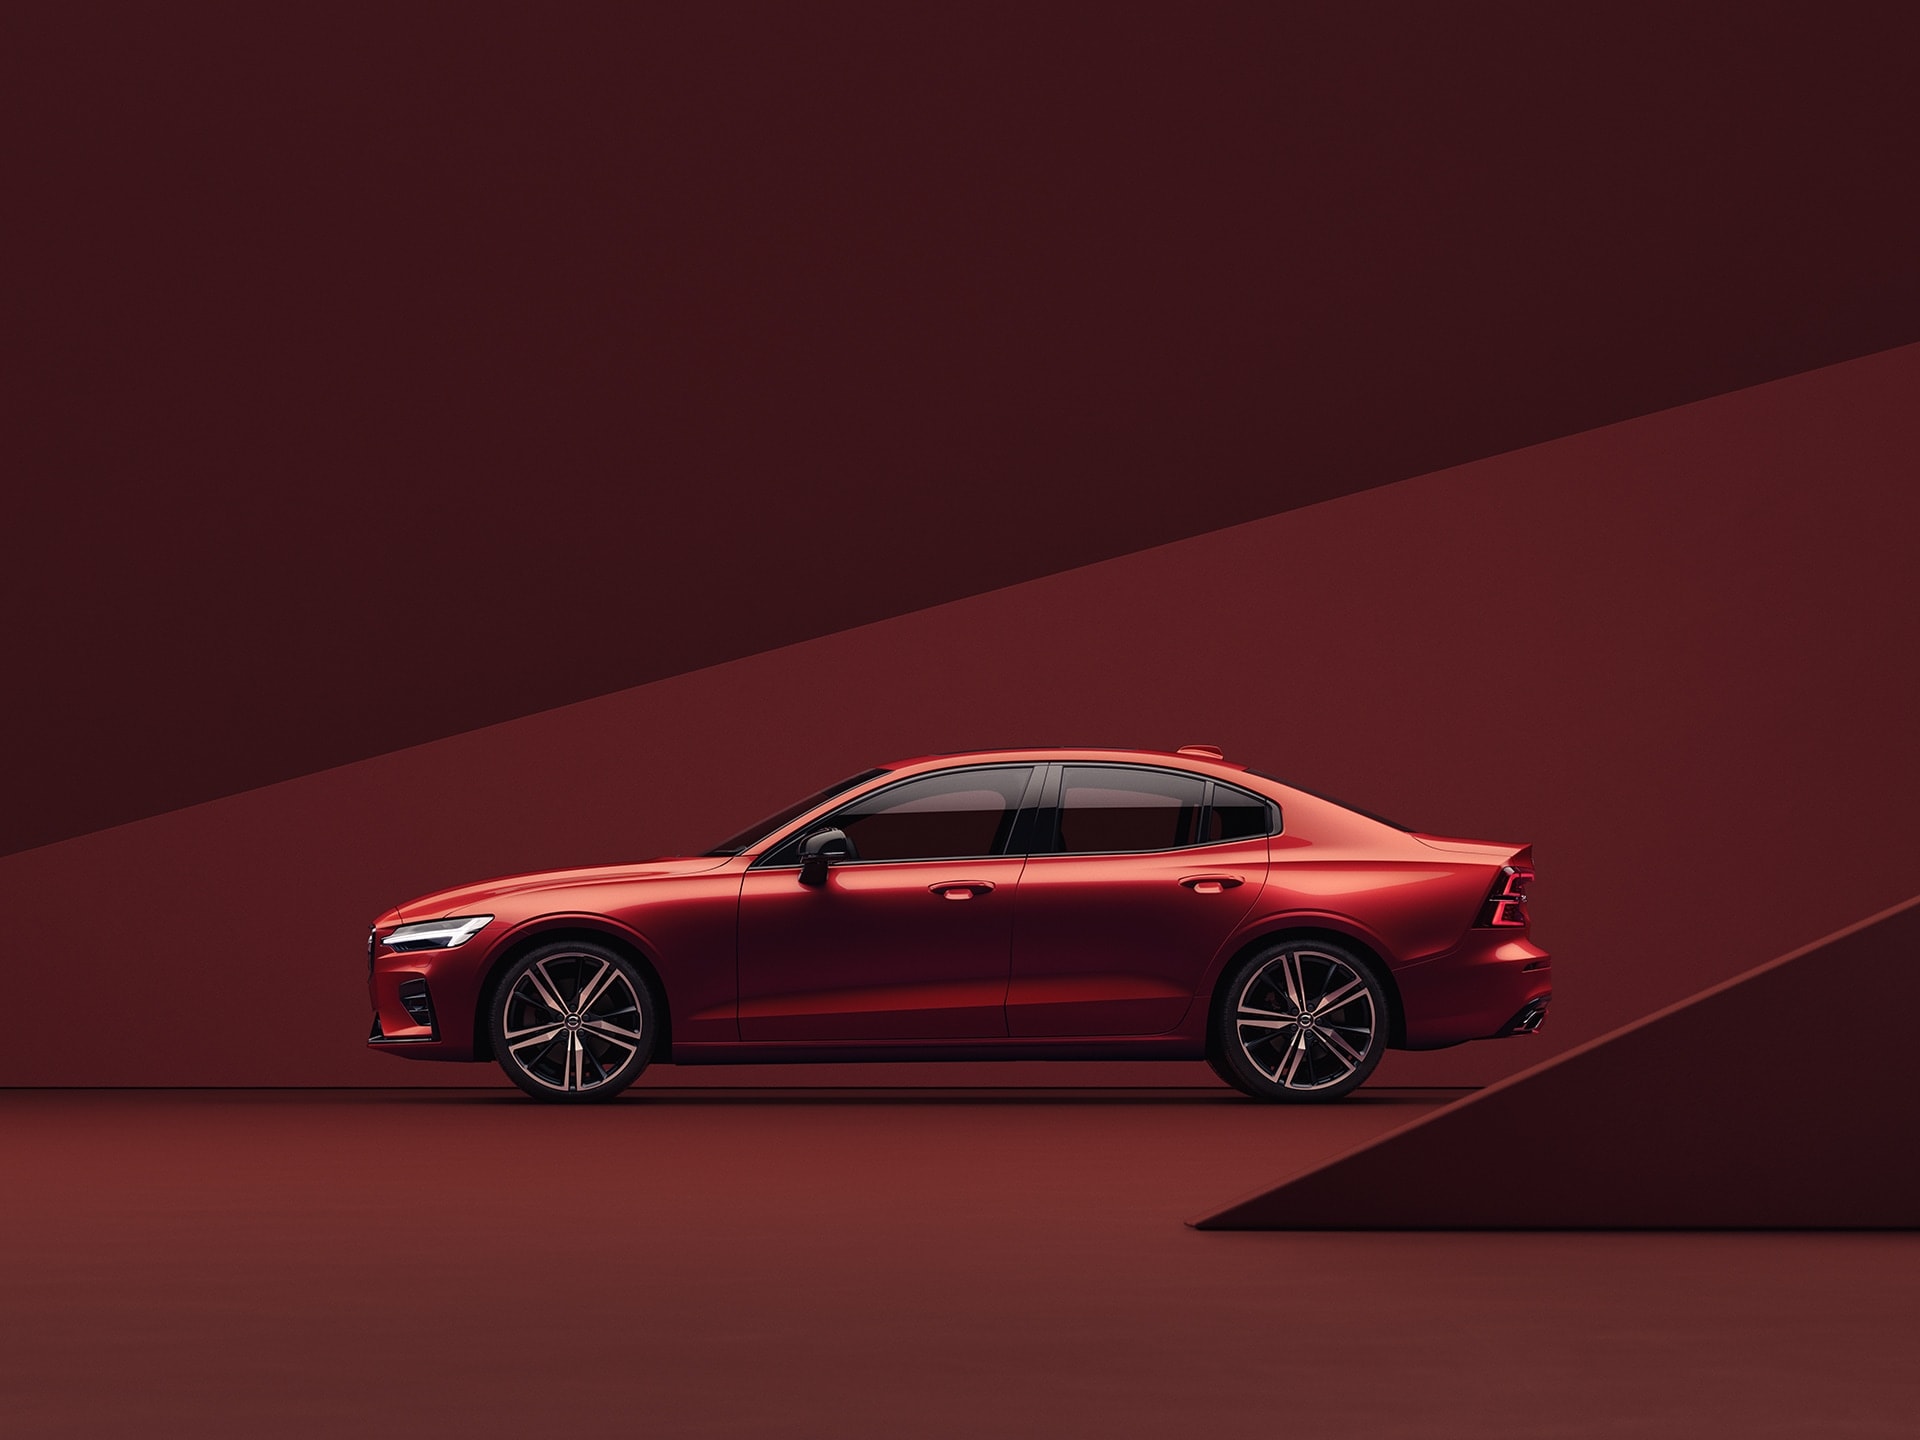 Volvo S60 красного цвета, припаркованный на красном фоне